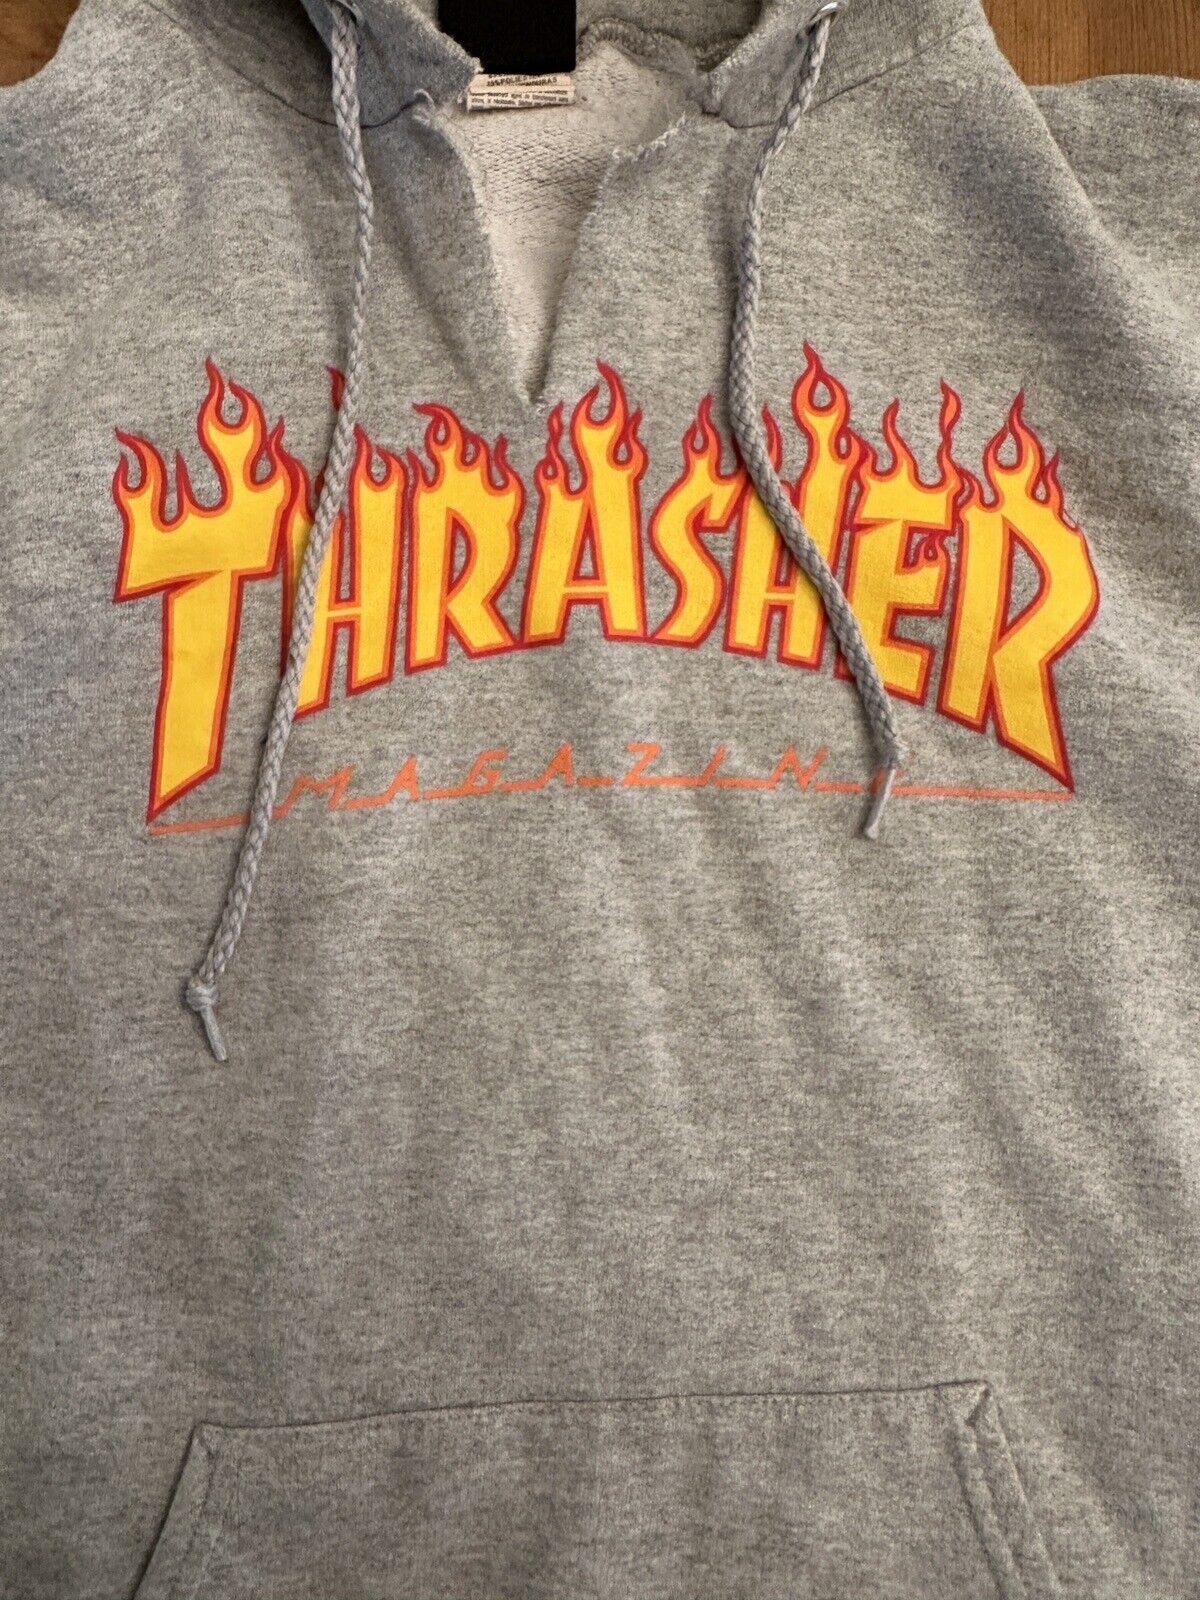 Thrasher Magazine Hoodie Flame Logo Medium Pullov… - image 2